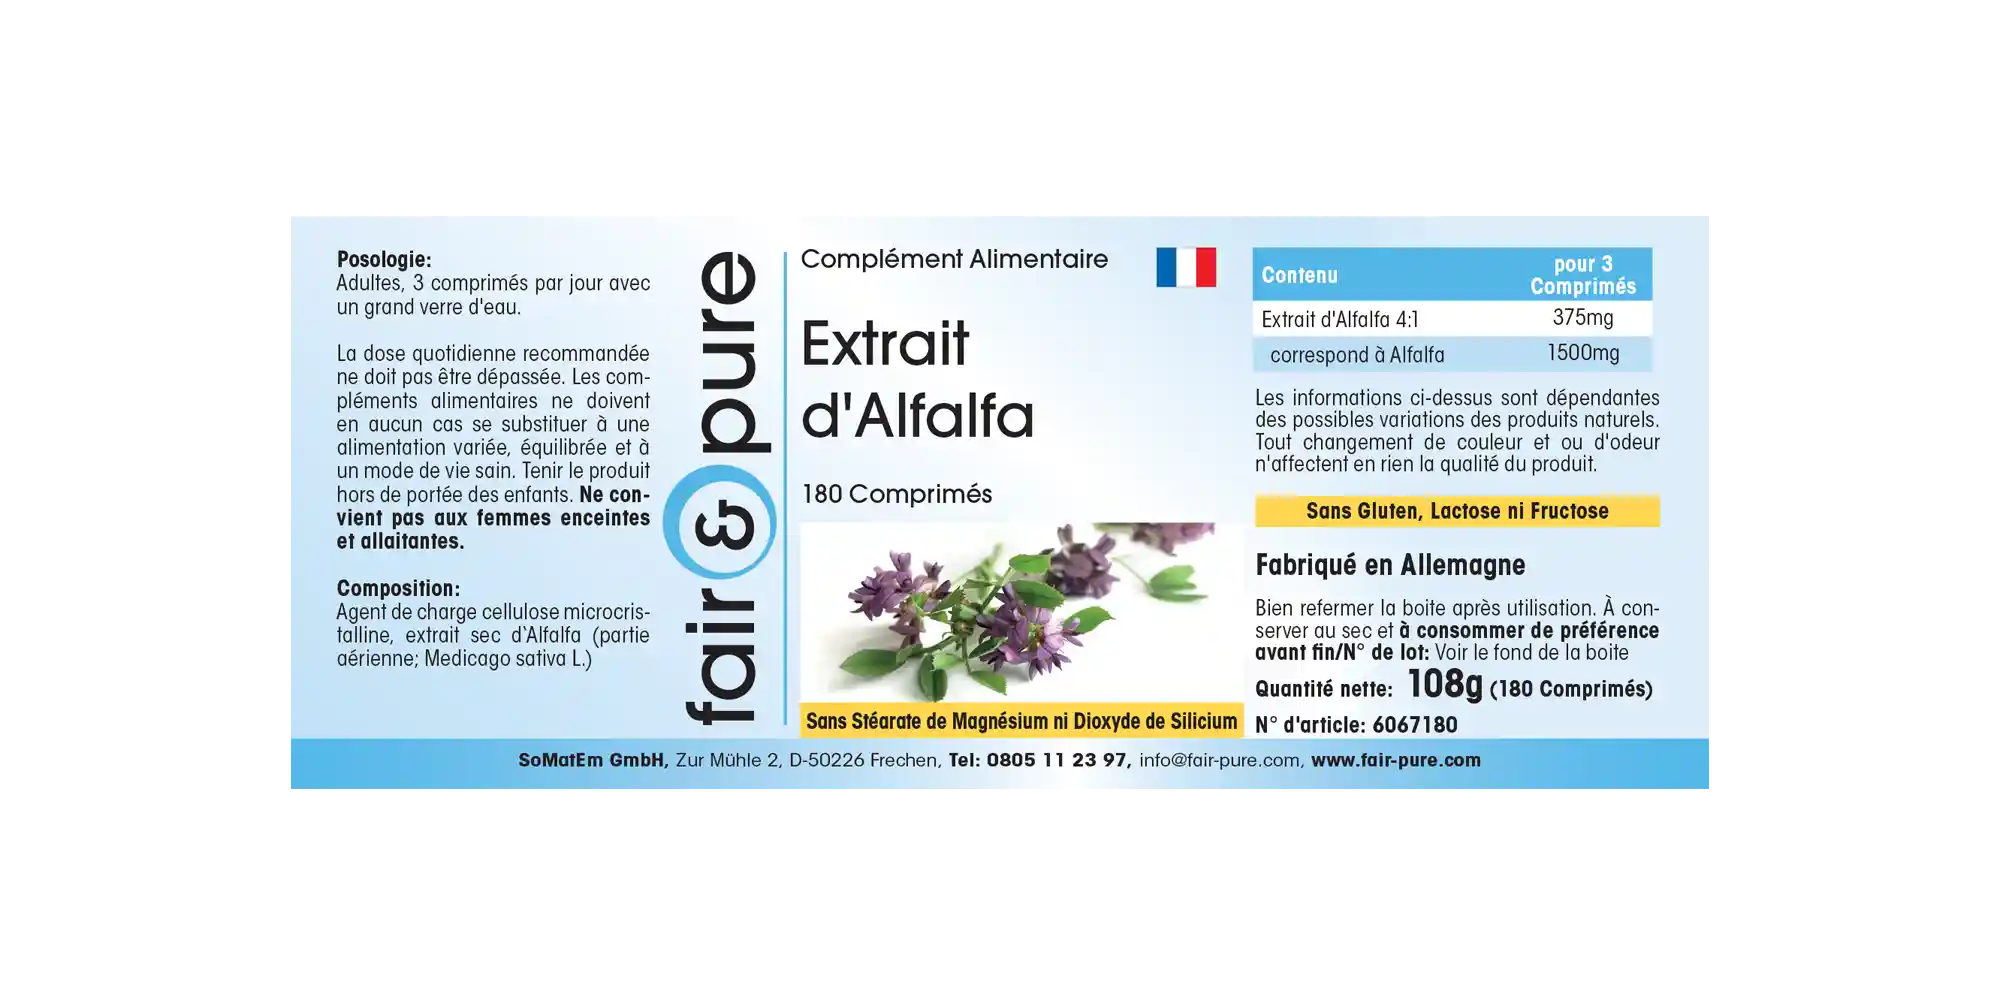 Alfalfa extract